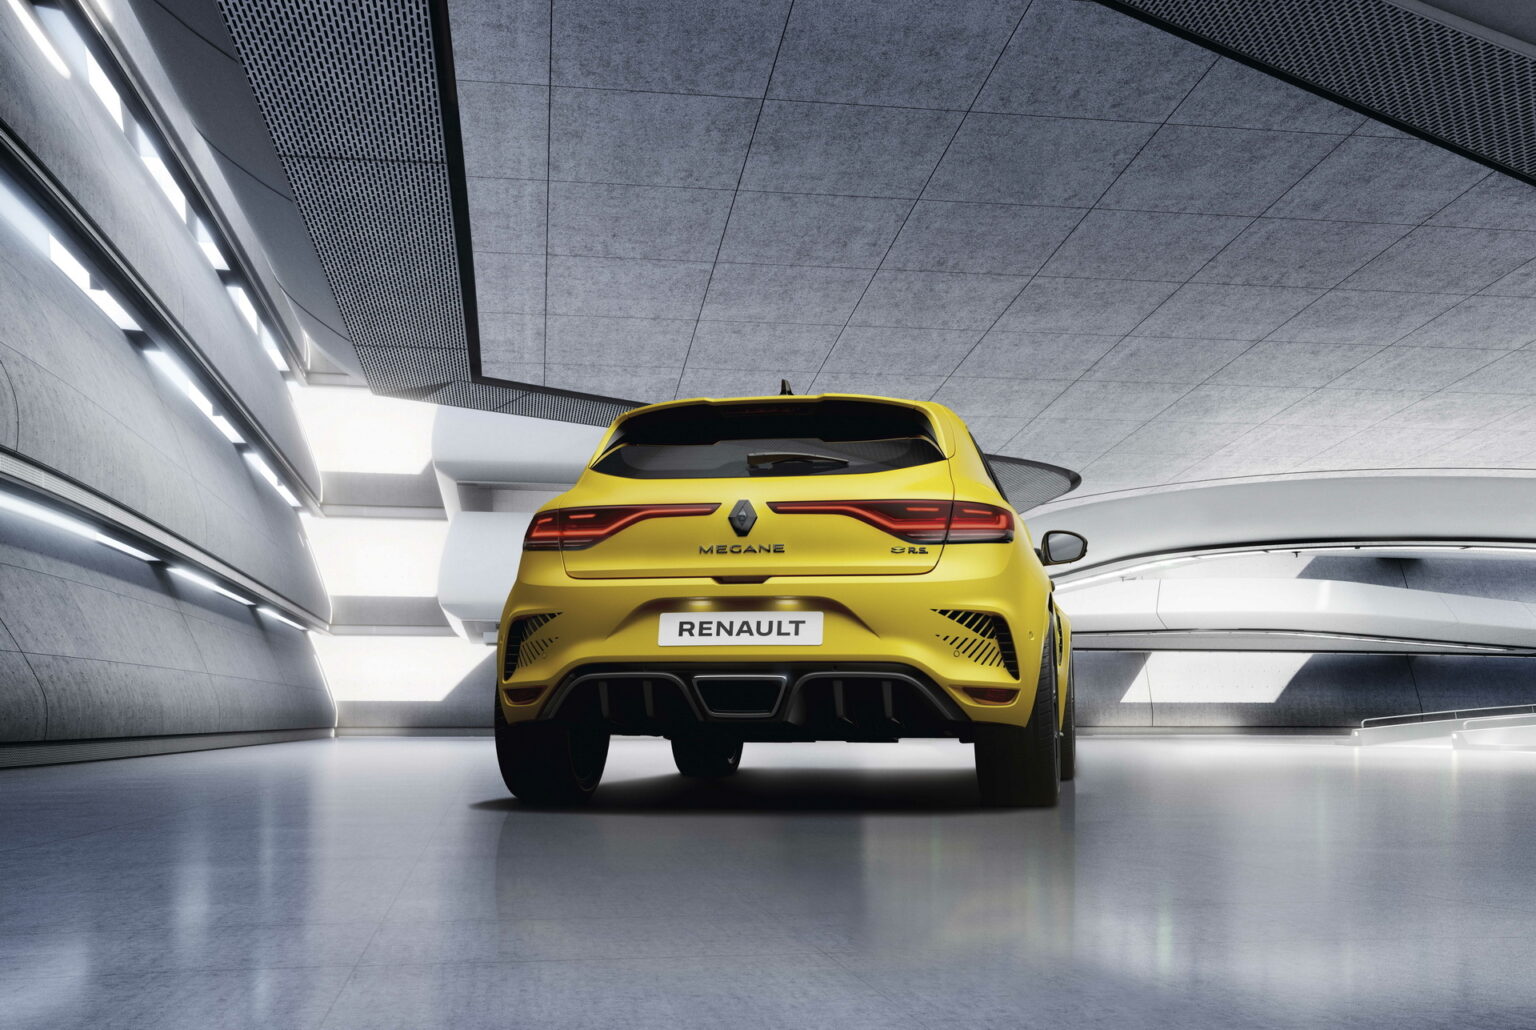 2023 Renault Megane RS Ultime 7 1536x1030 1